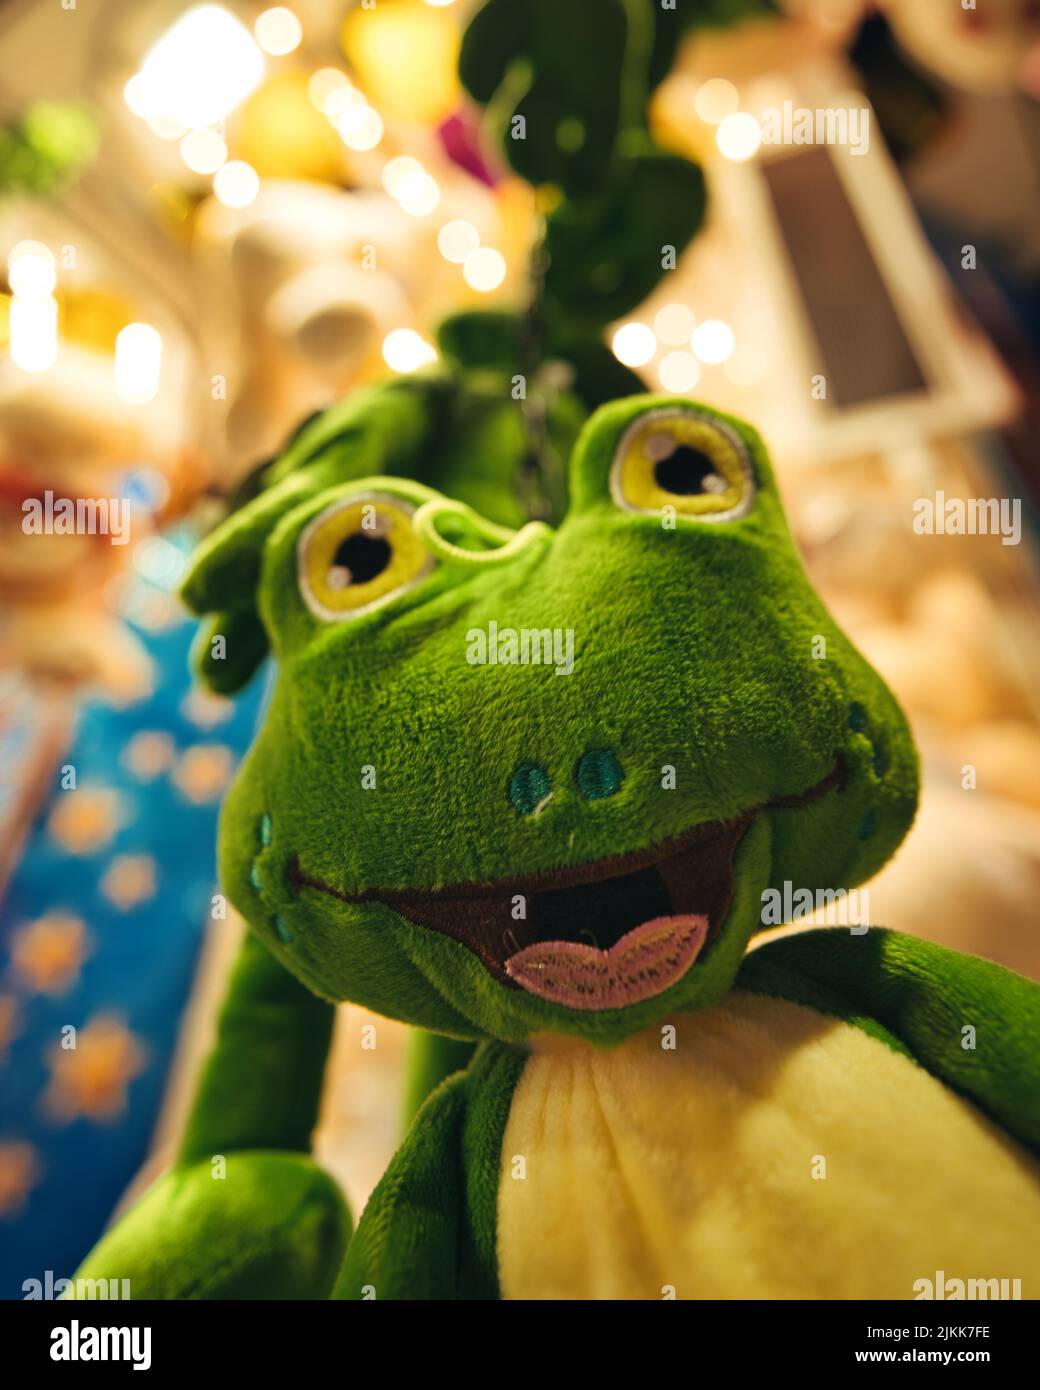 https://c8.alamy.com/comp/2JKK7FE/a-soft-focus-of-a-stuffed-green-frog-toy-against-a-bright-ackground-2JKK7FE.jpg